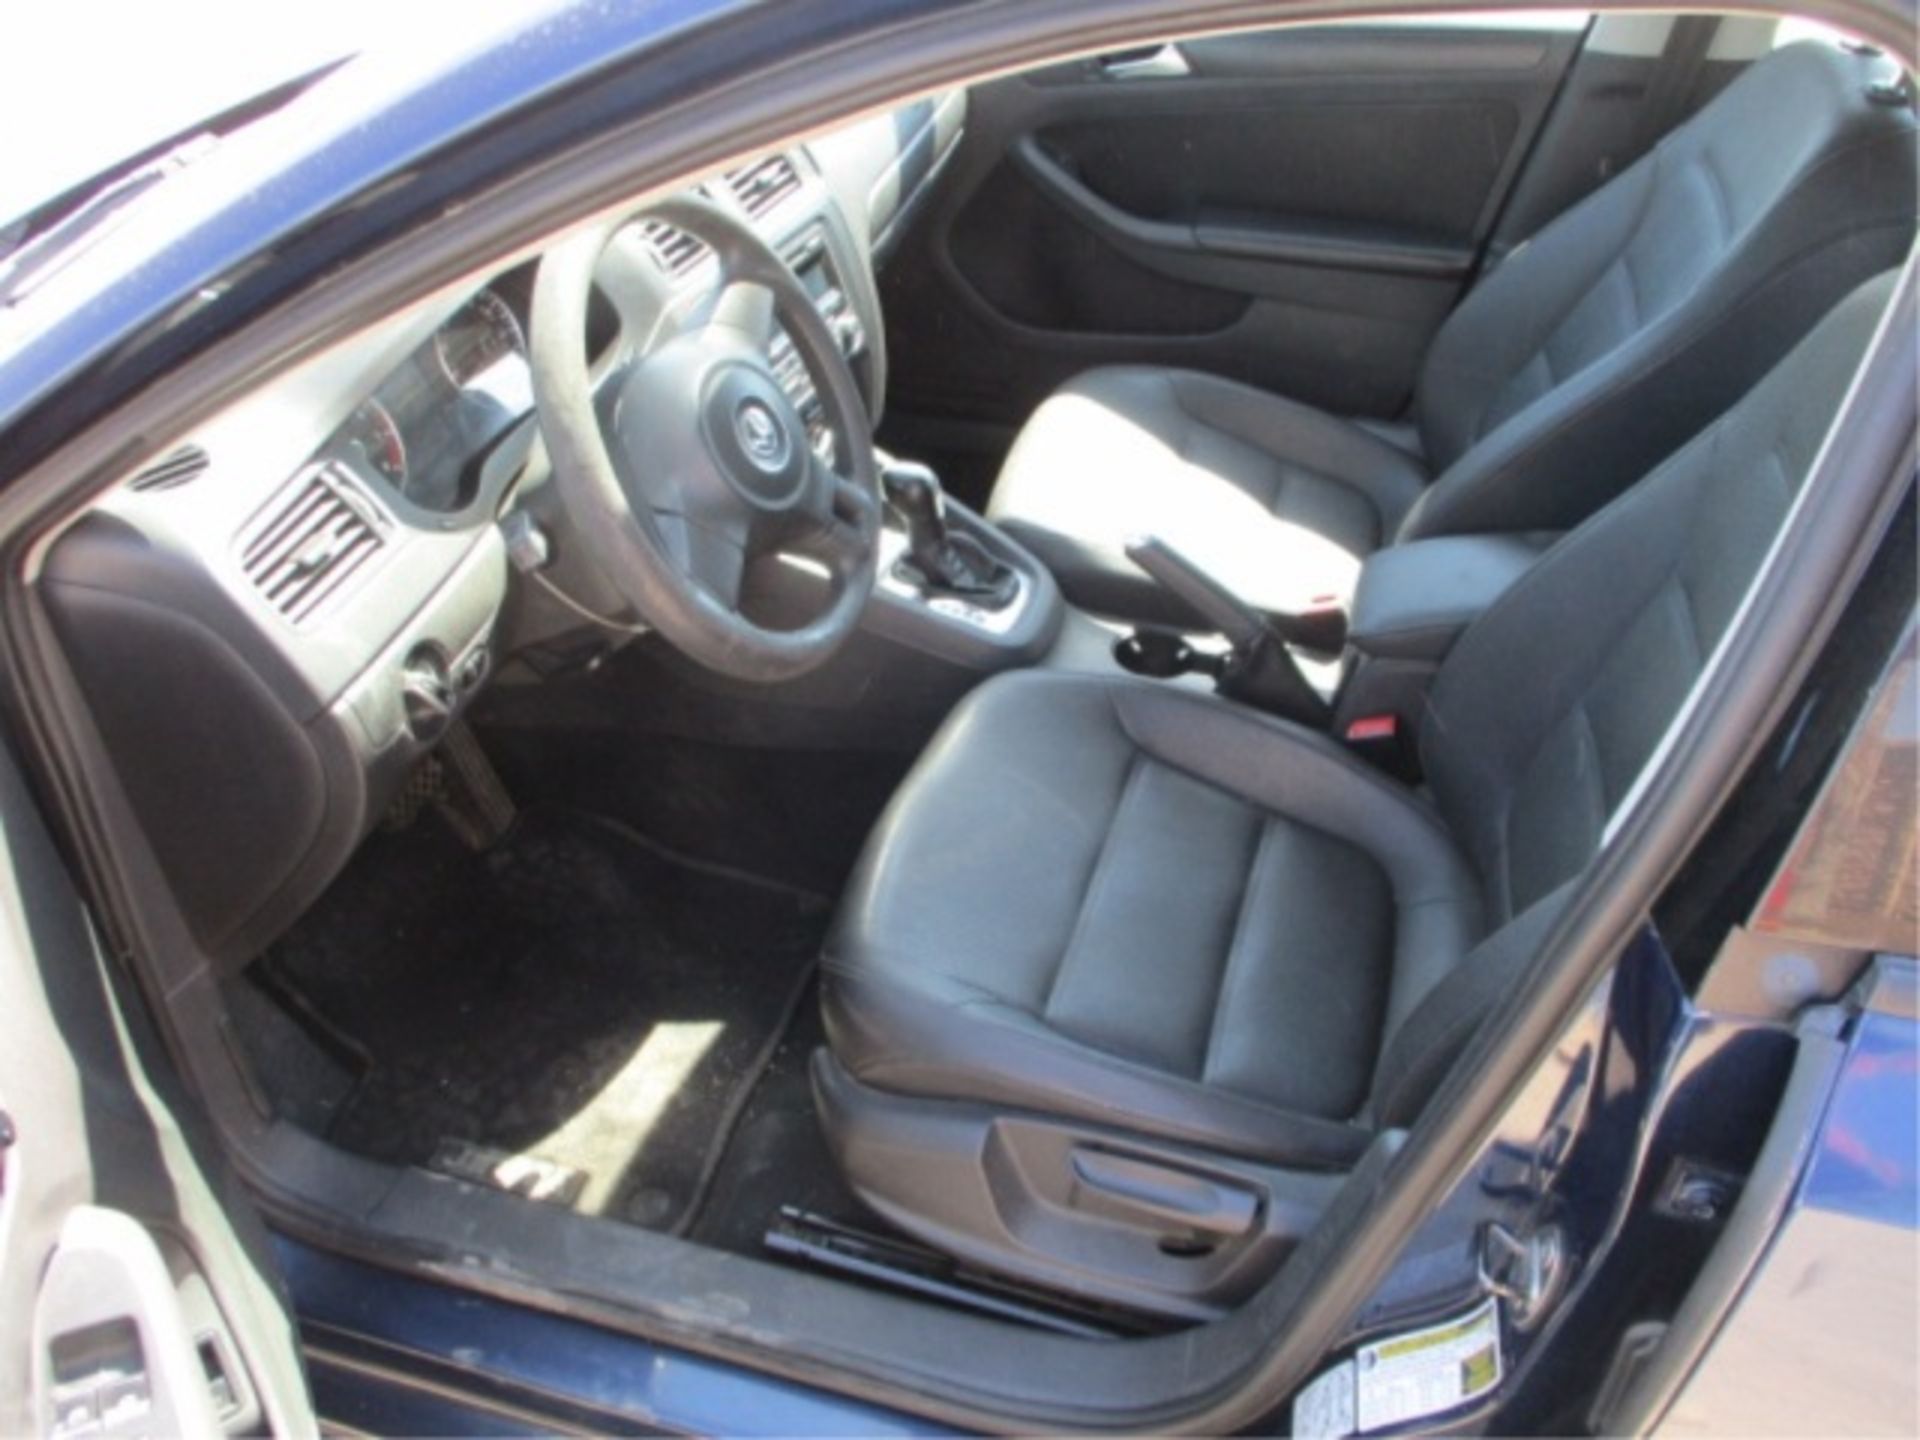 2012 Volkswagen Jetta Sedan, 2.5L Gas, Automatic, S/N: 3VWDP7AJ6CM345626, Mile/Hours - 82277 - Image 18 of 40